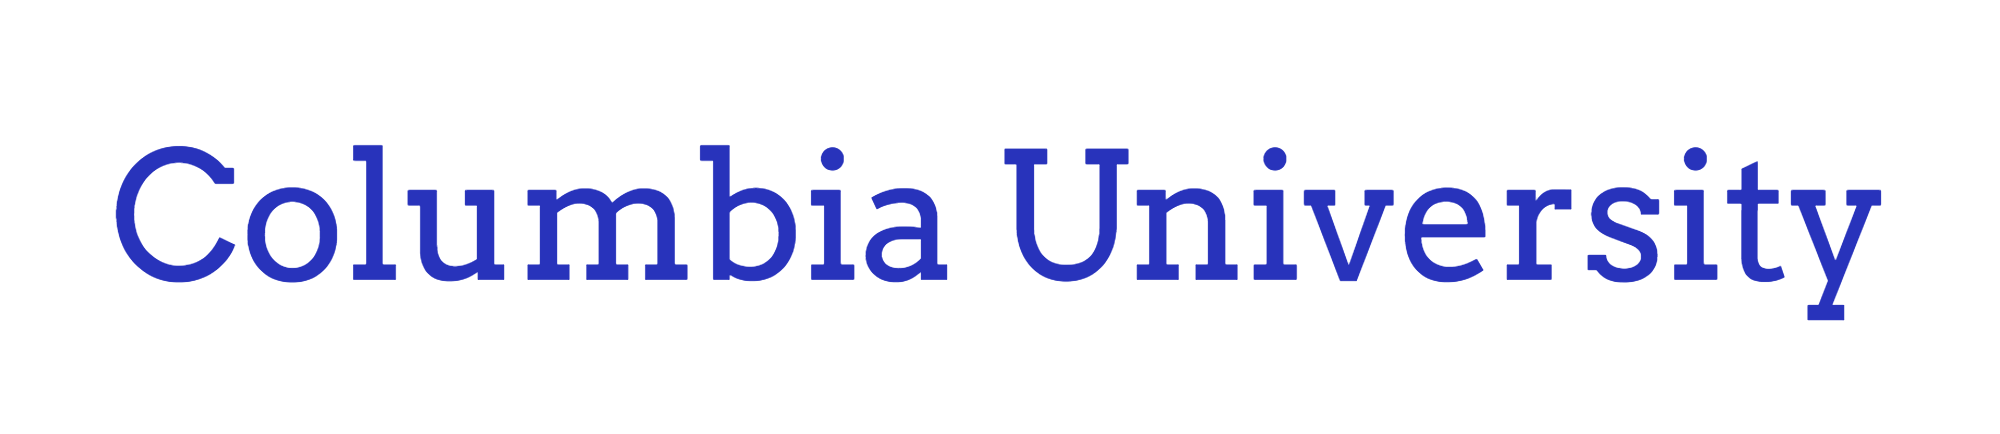 Columbia University-logo.png